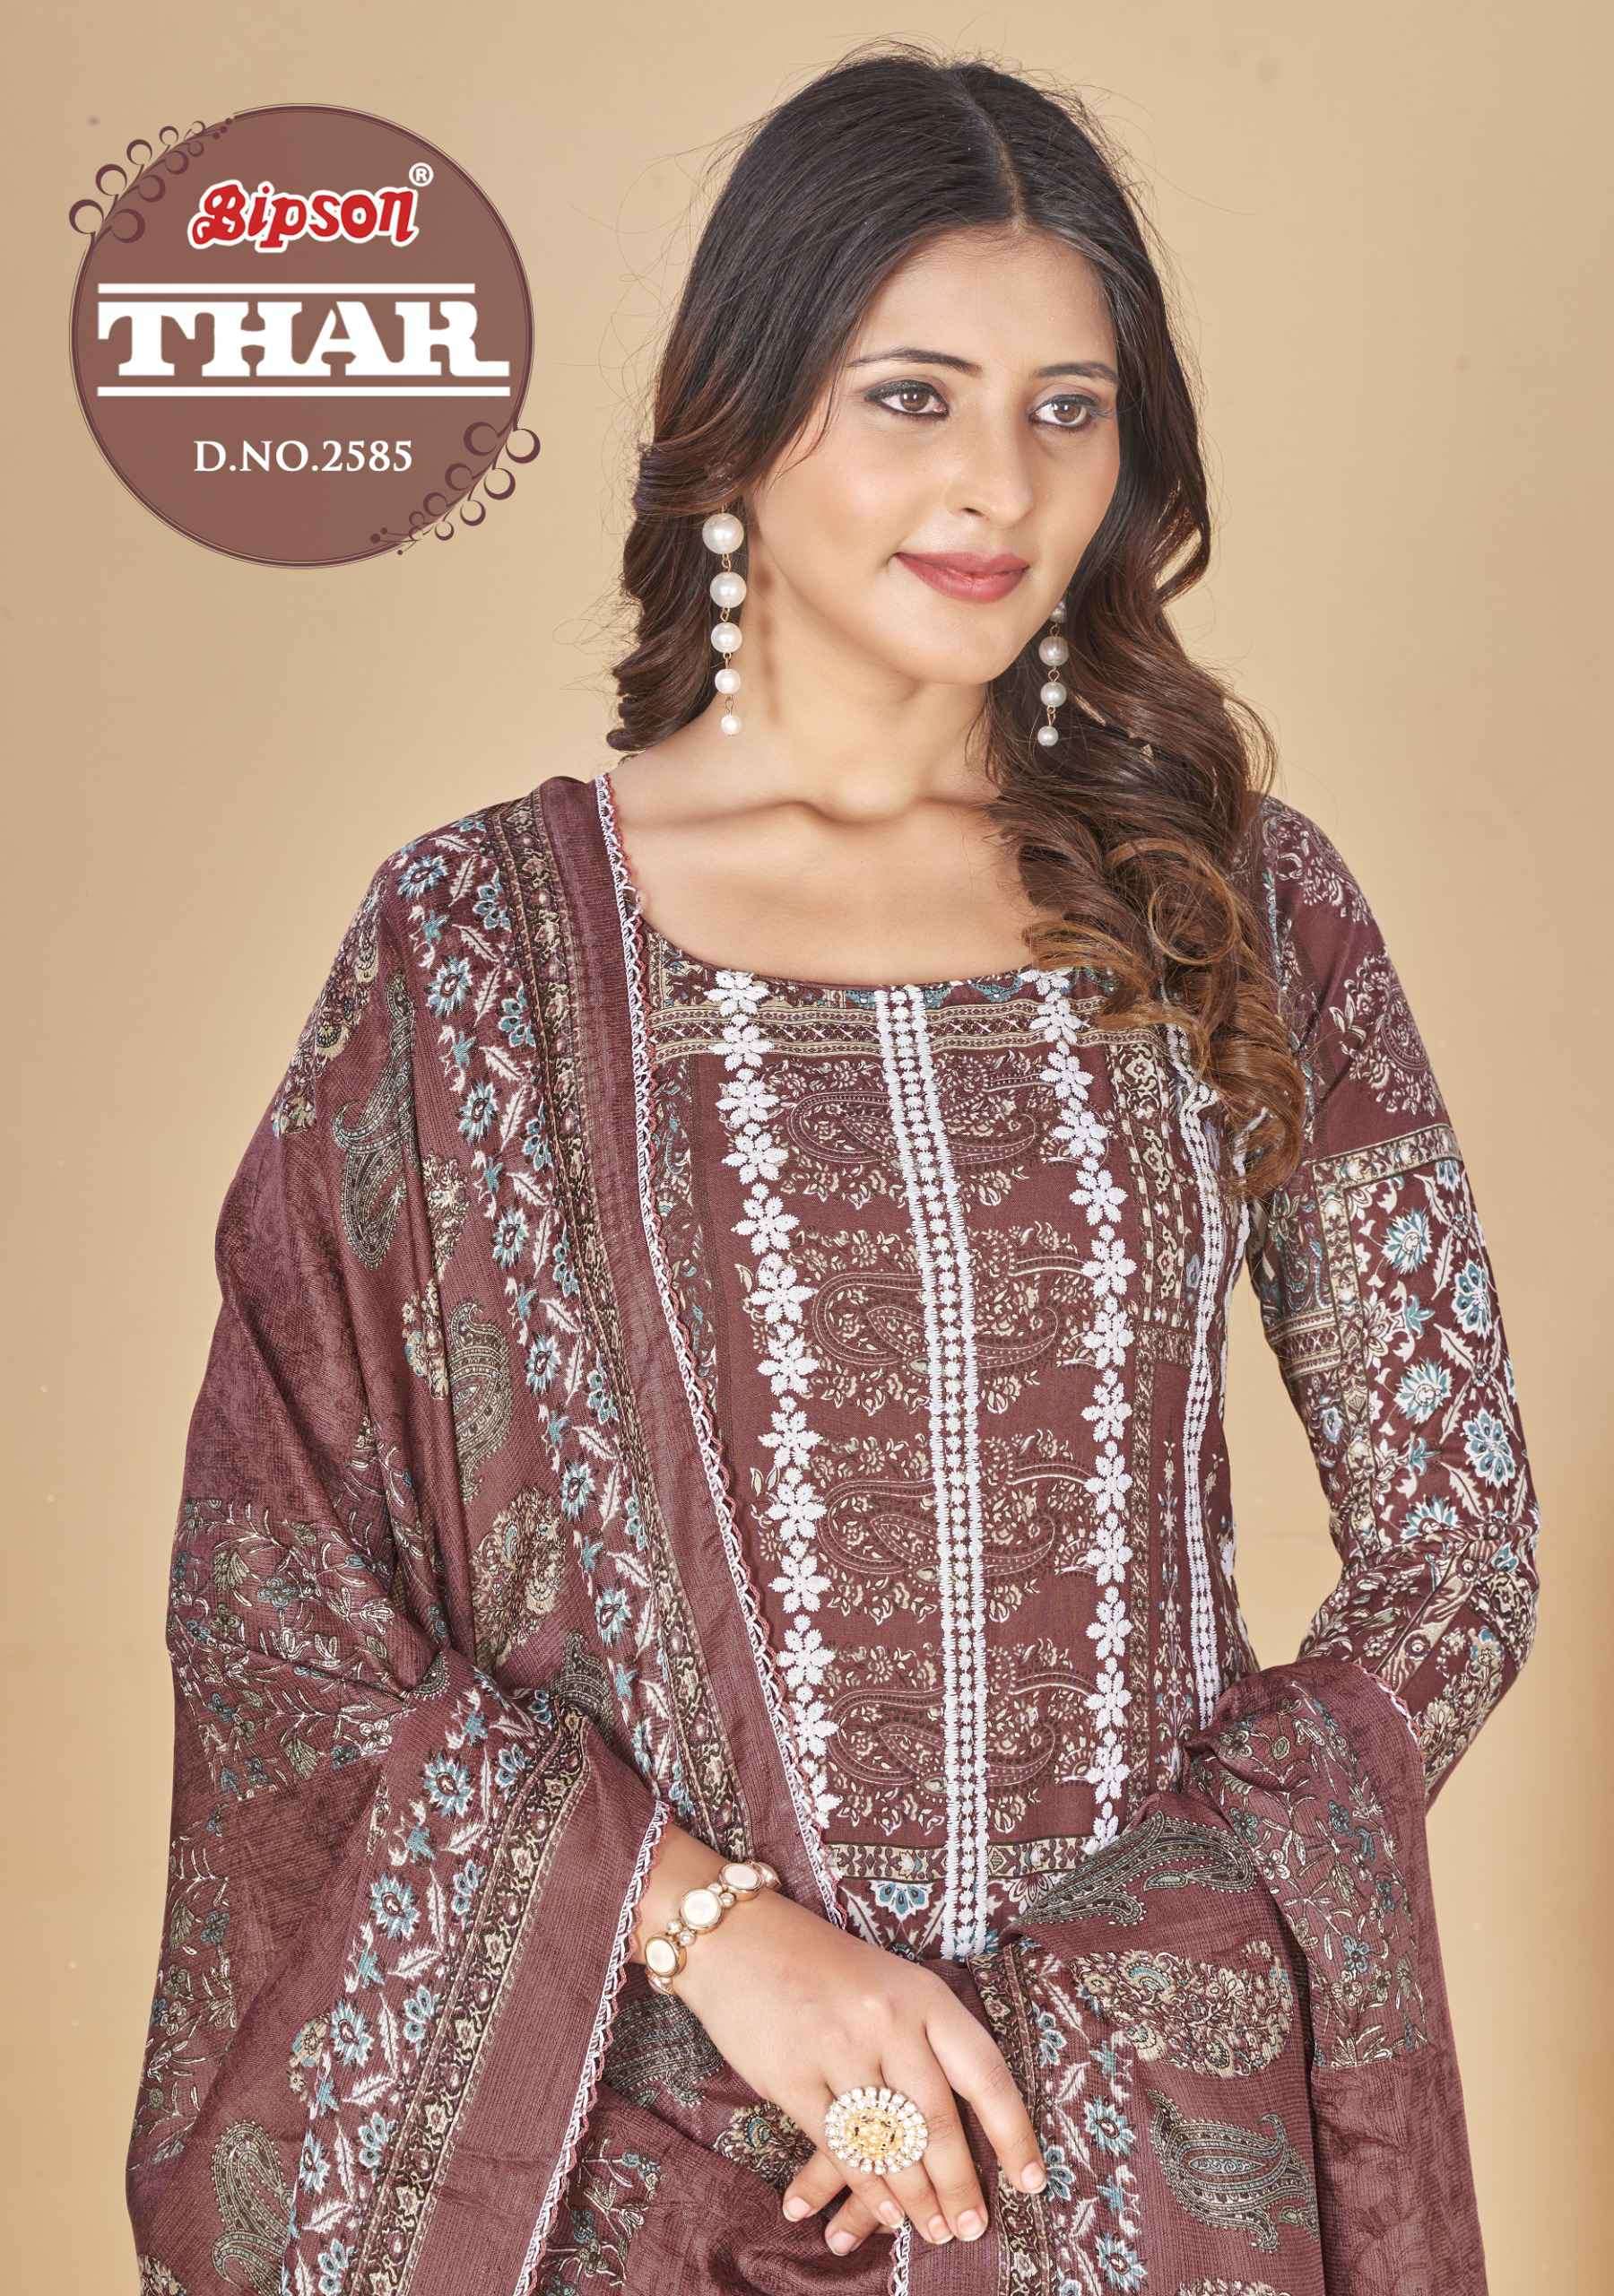 Bipson Thar 2585 Ethnic Wear Pure Cotton Dress Catalog Suppliers